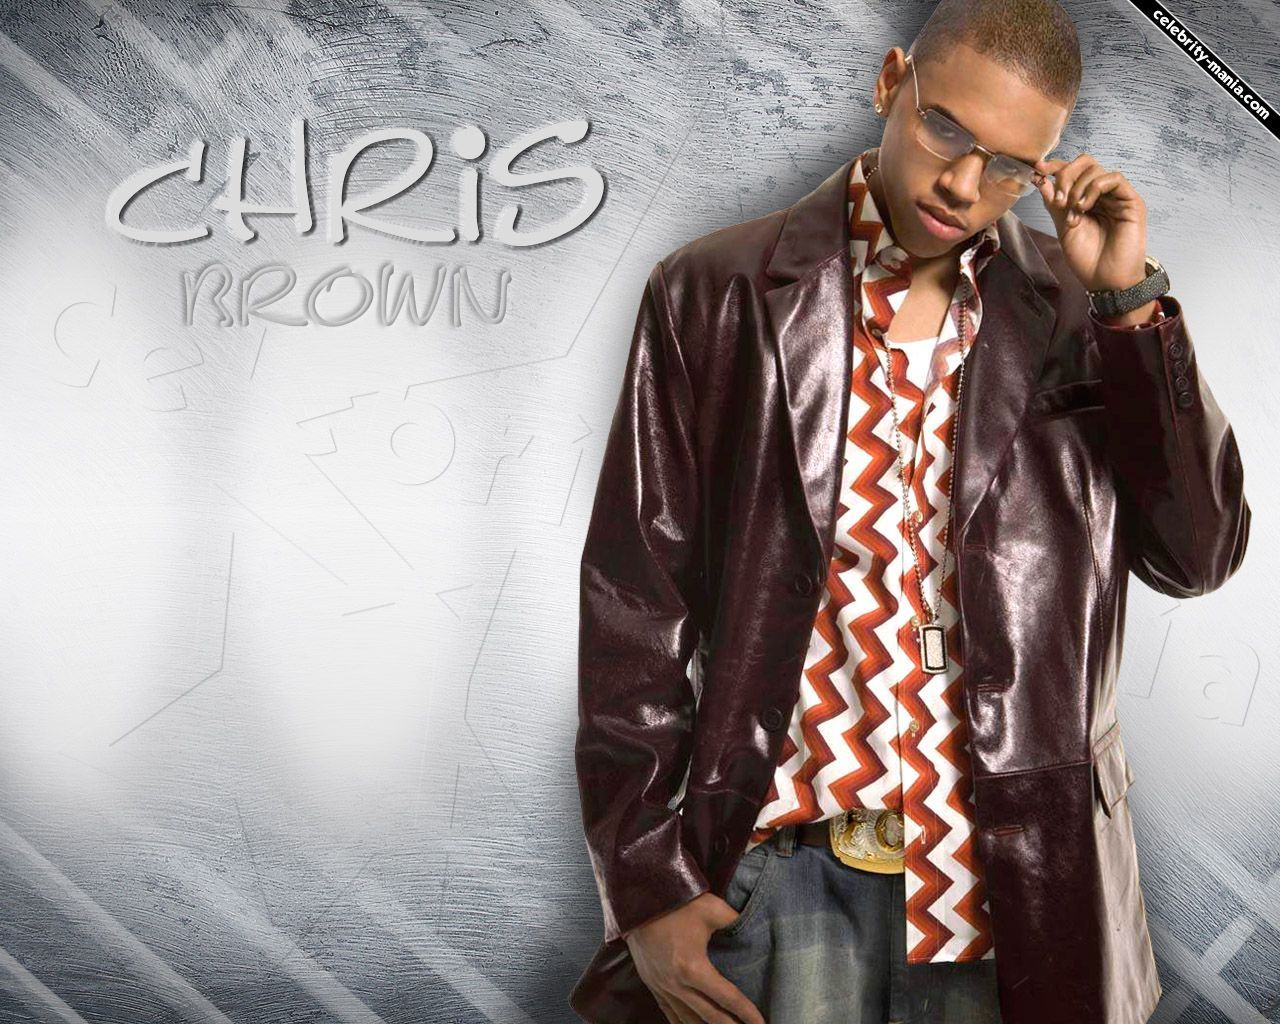 Chris Brown - Chris Brown Wallpaper 434475 - Fanpop